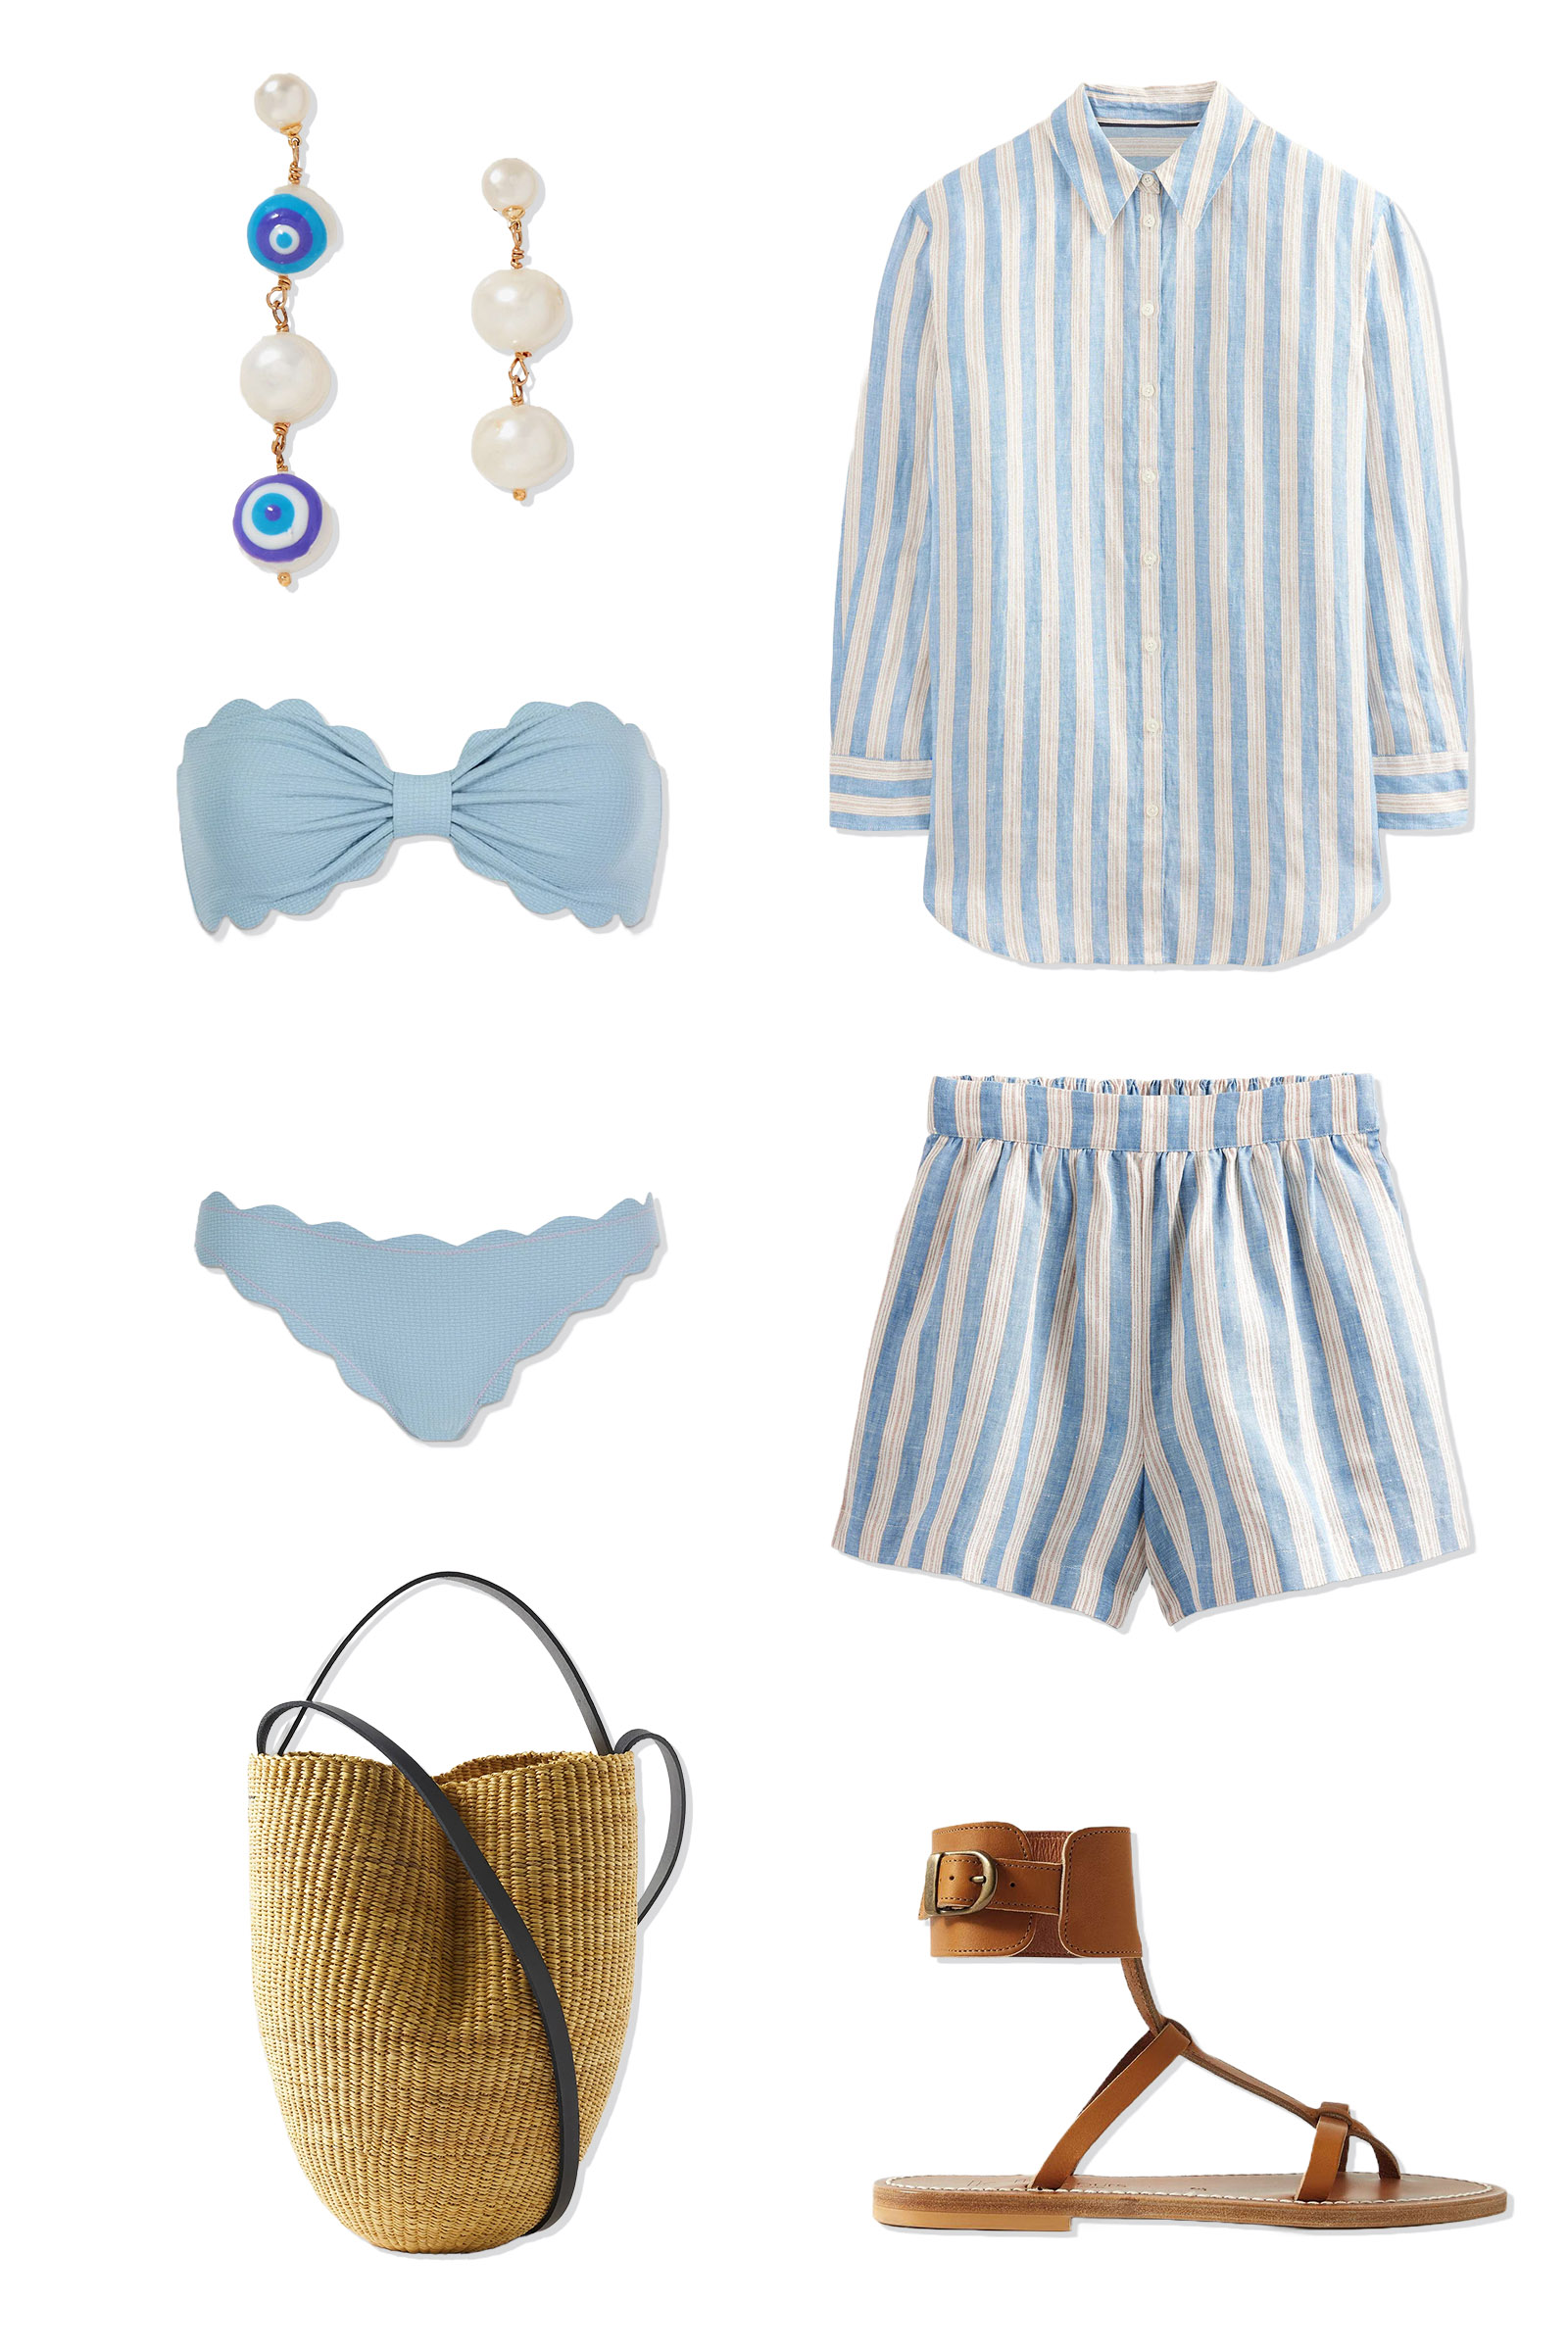 Summer wardrobe sorted 🌞🌴